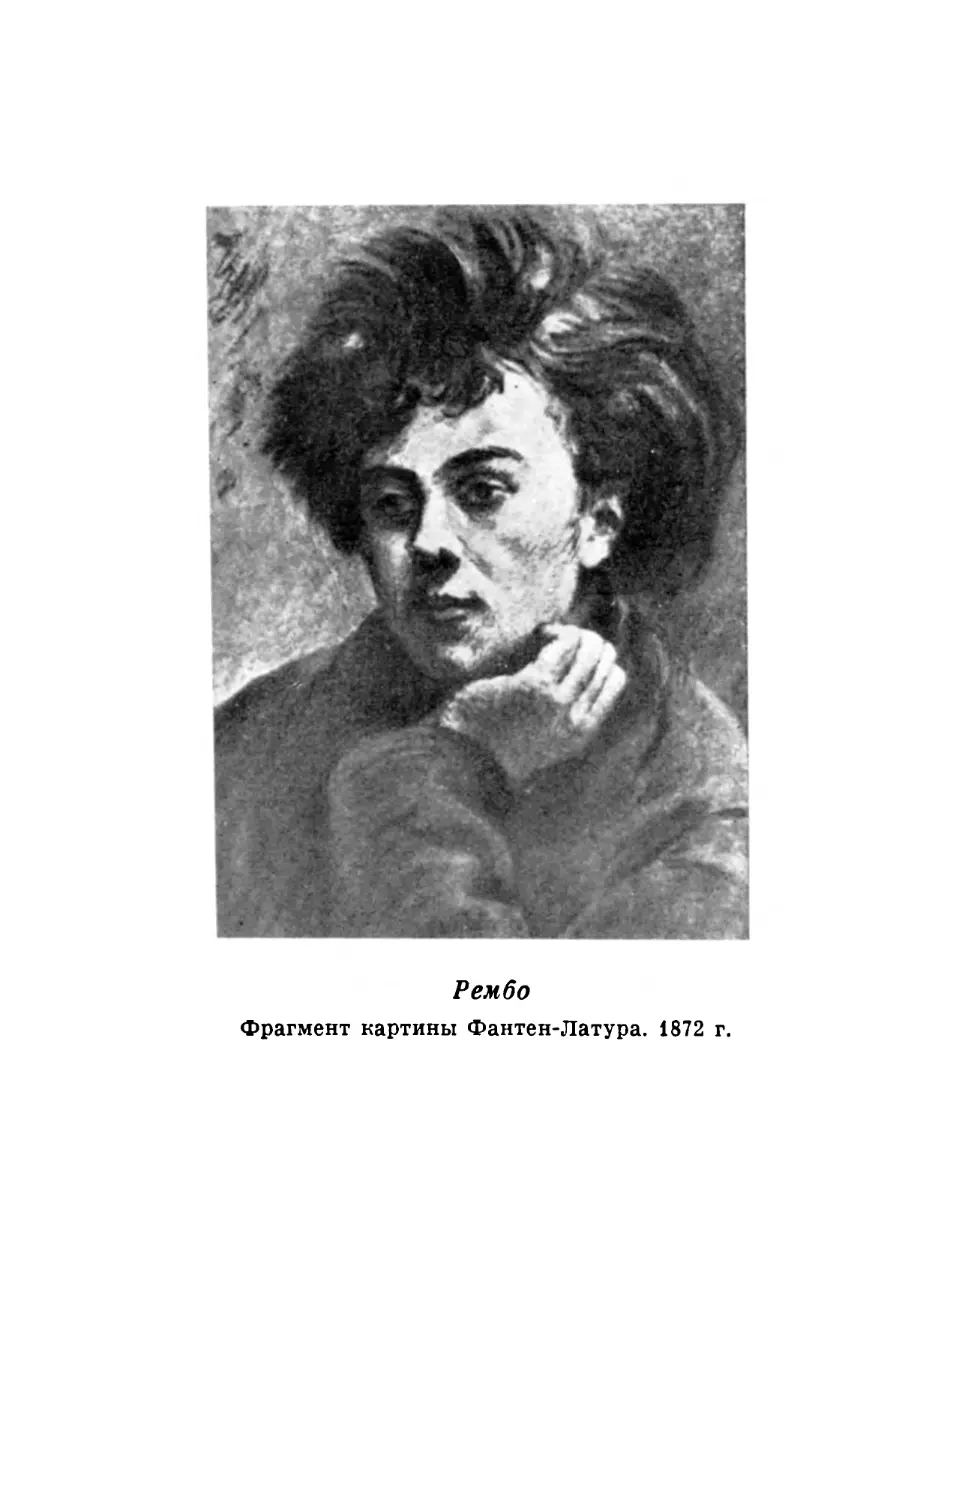 Рембо. Фрагмент картины Фантен-Латура. 1872 г.